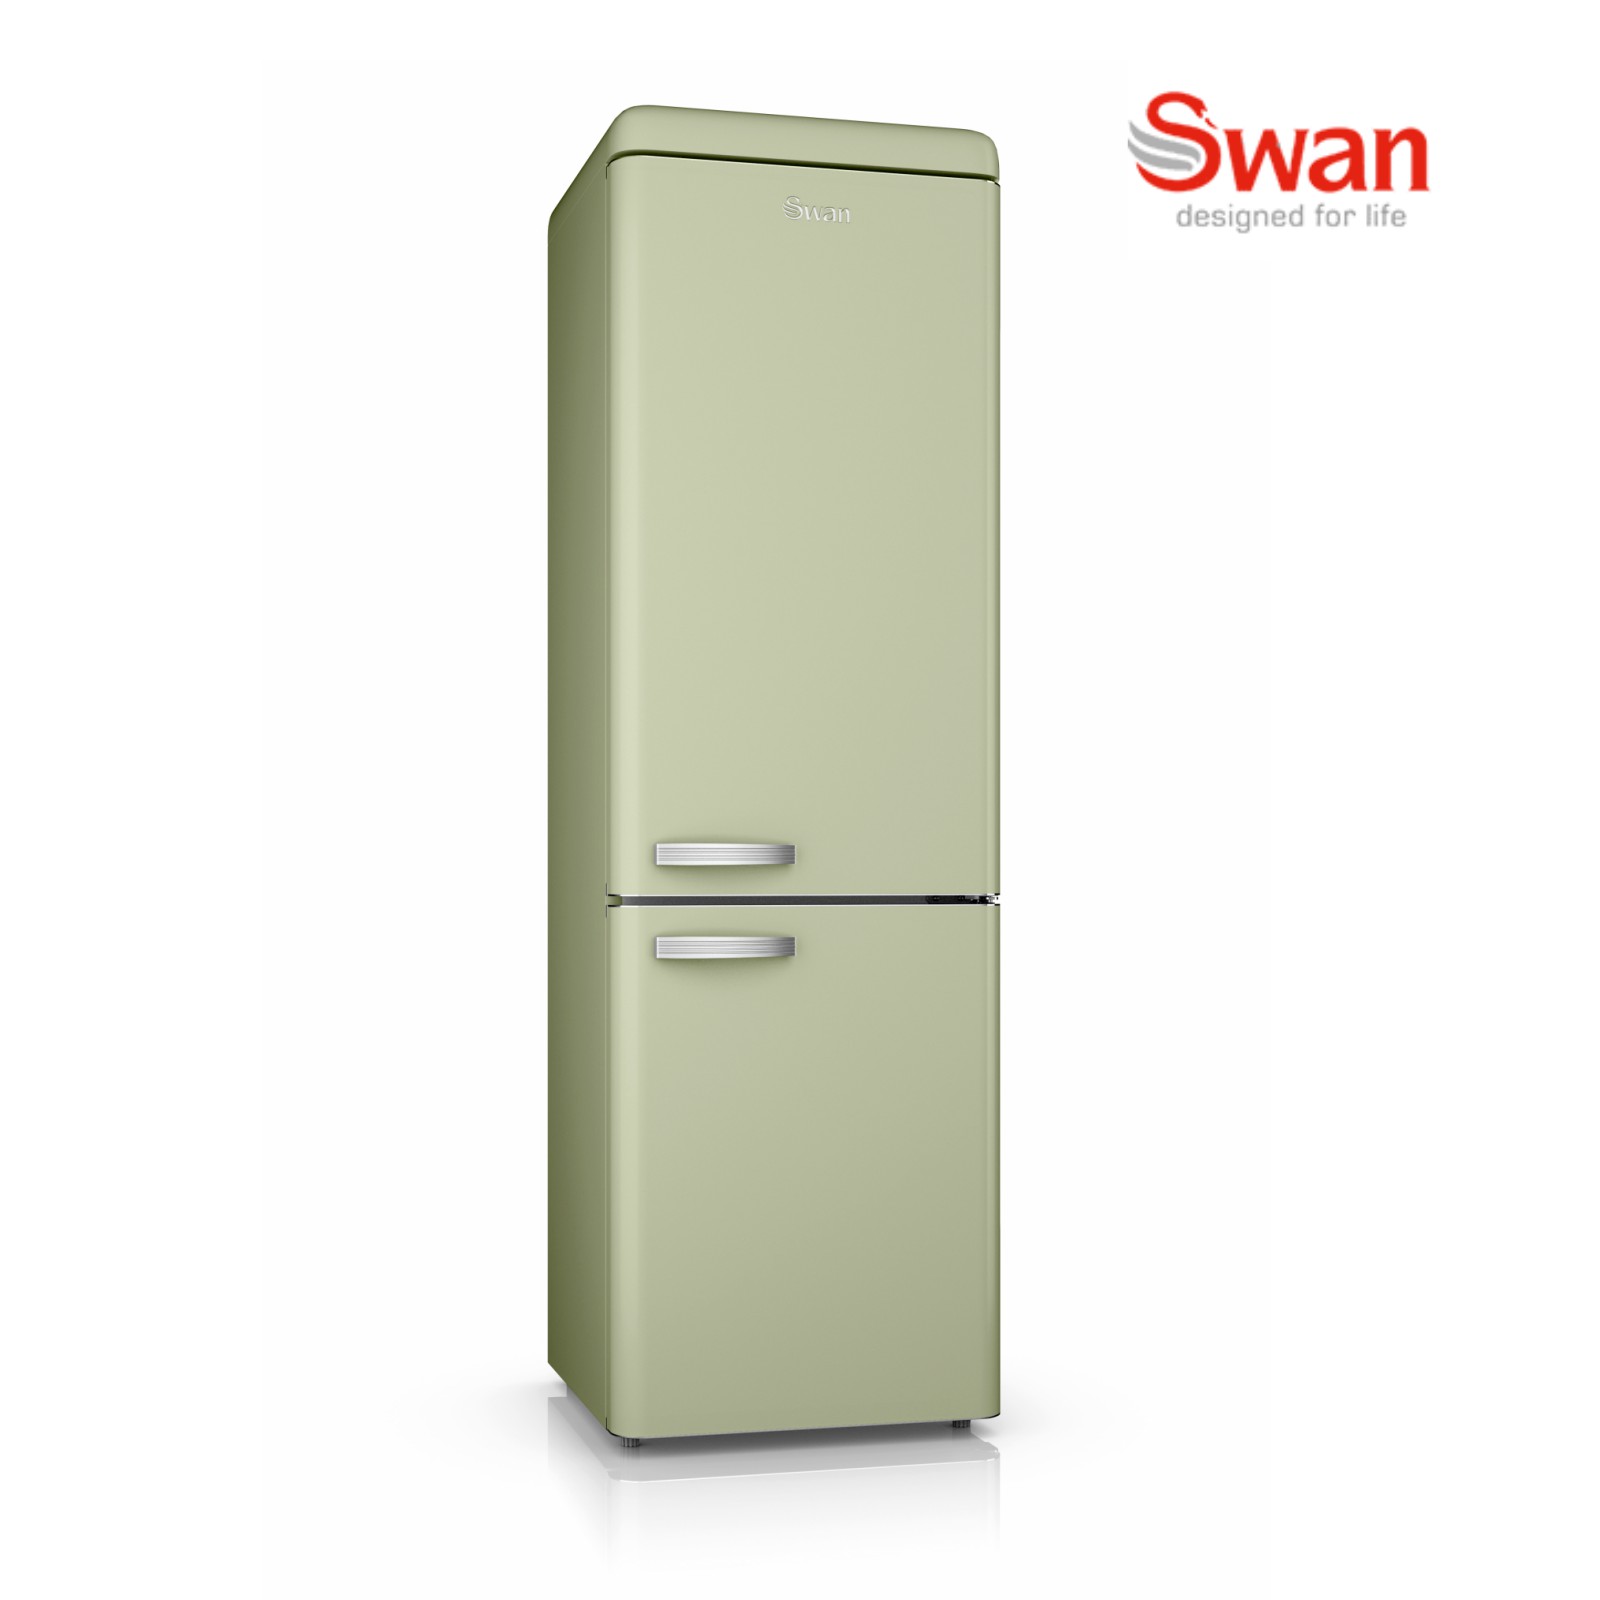 Swan SR11020GN Retro Fridge Freezer – Green